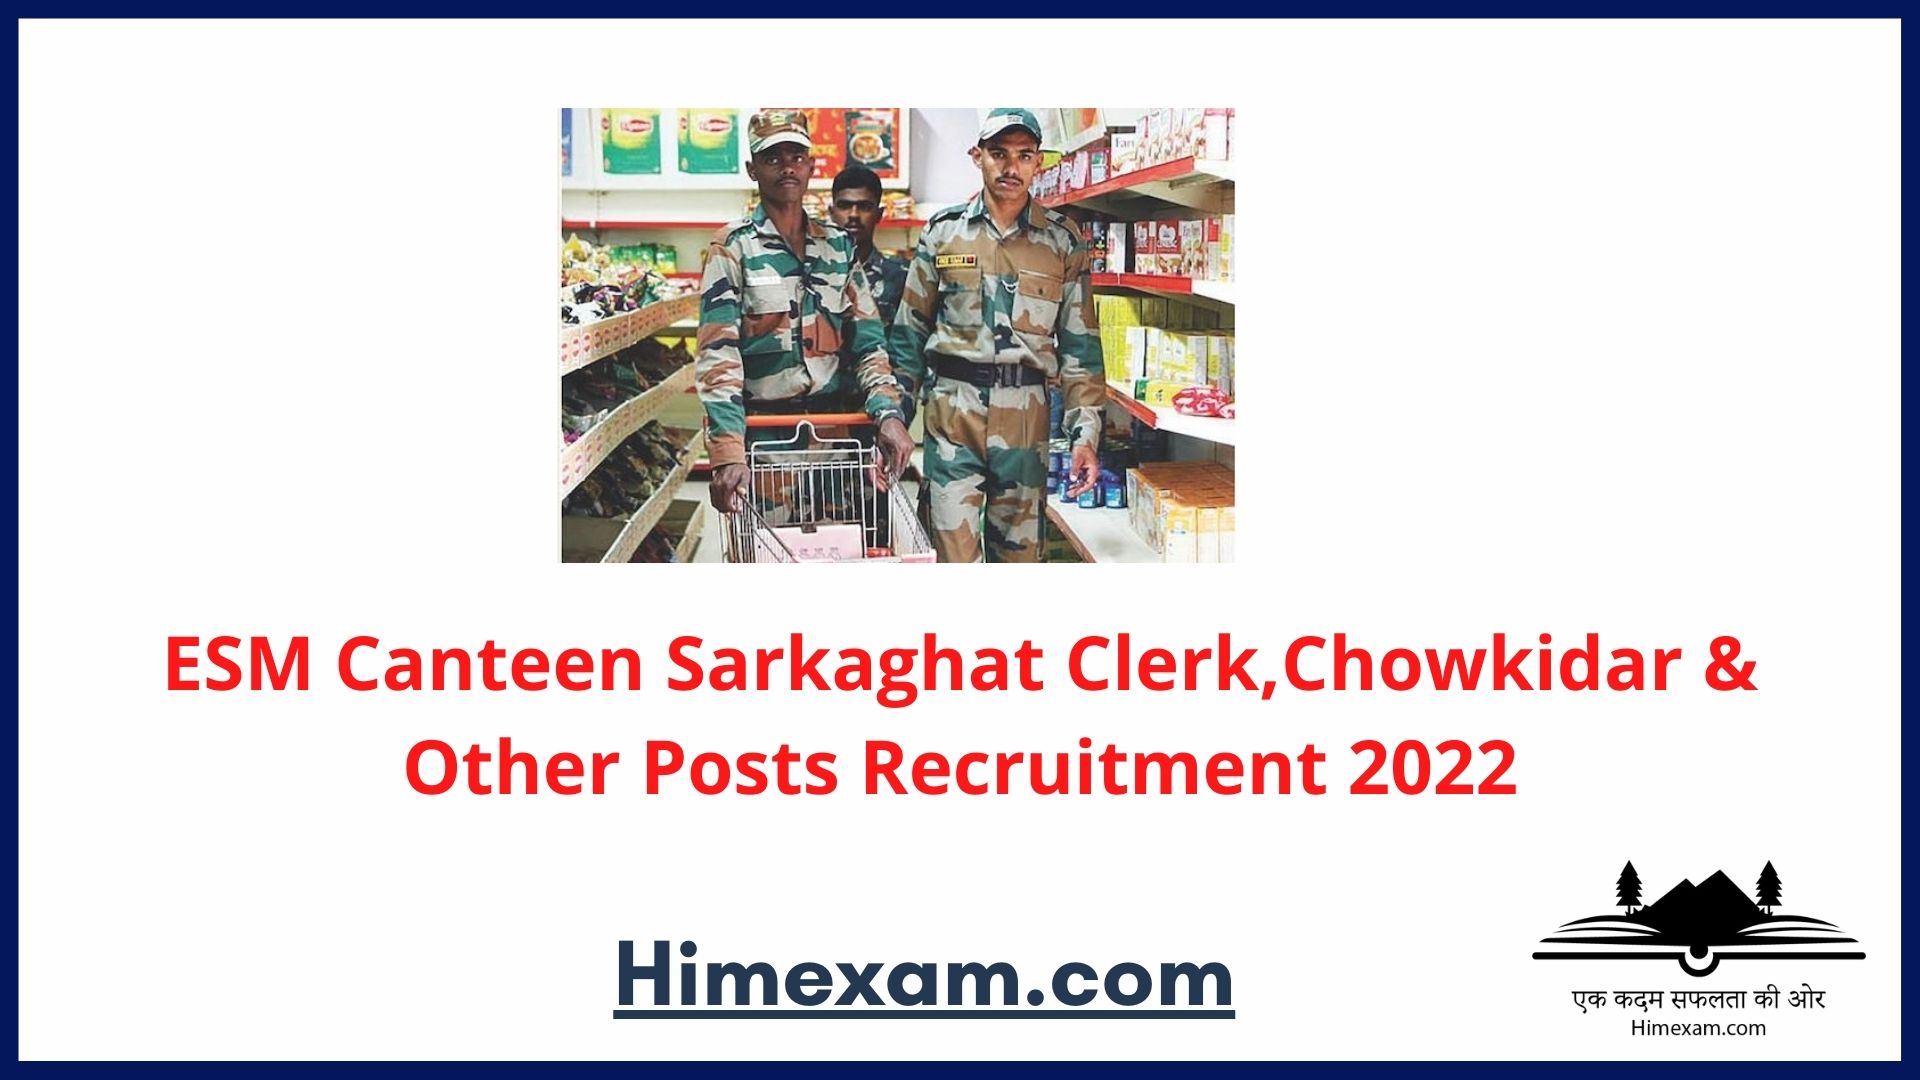 ESM Canteen Sarkaghat Clerk,Chowkidar & Other Posts Recruitment 2022